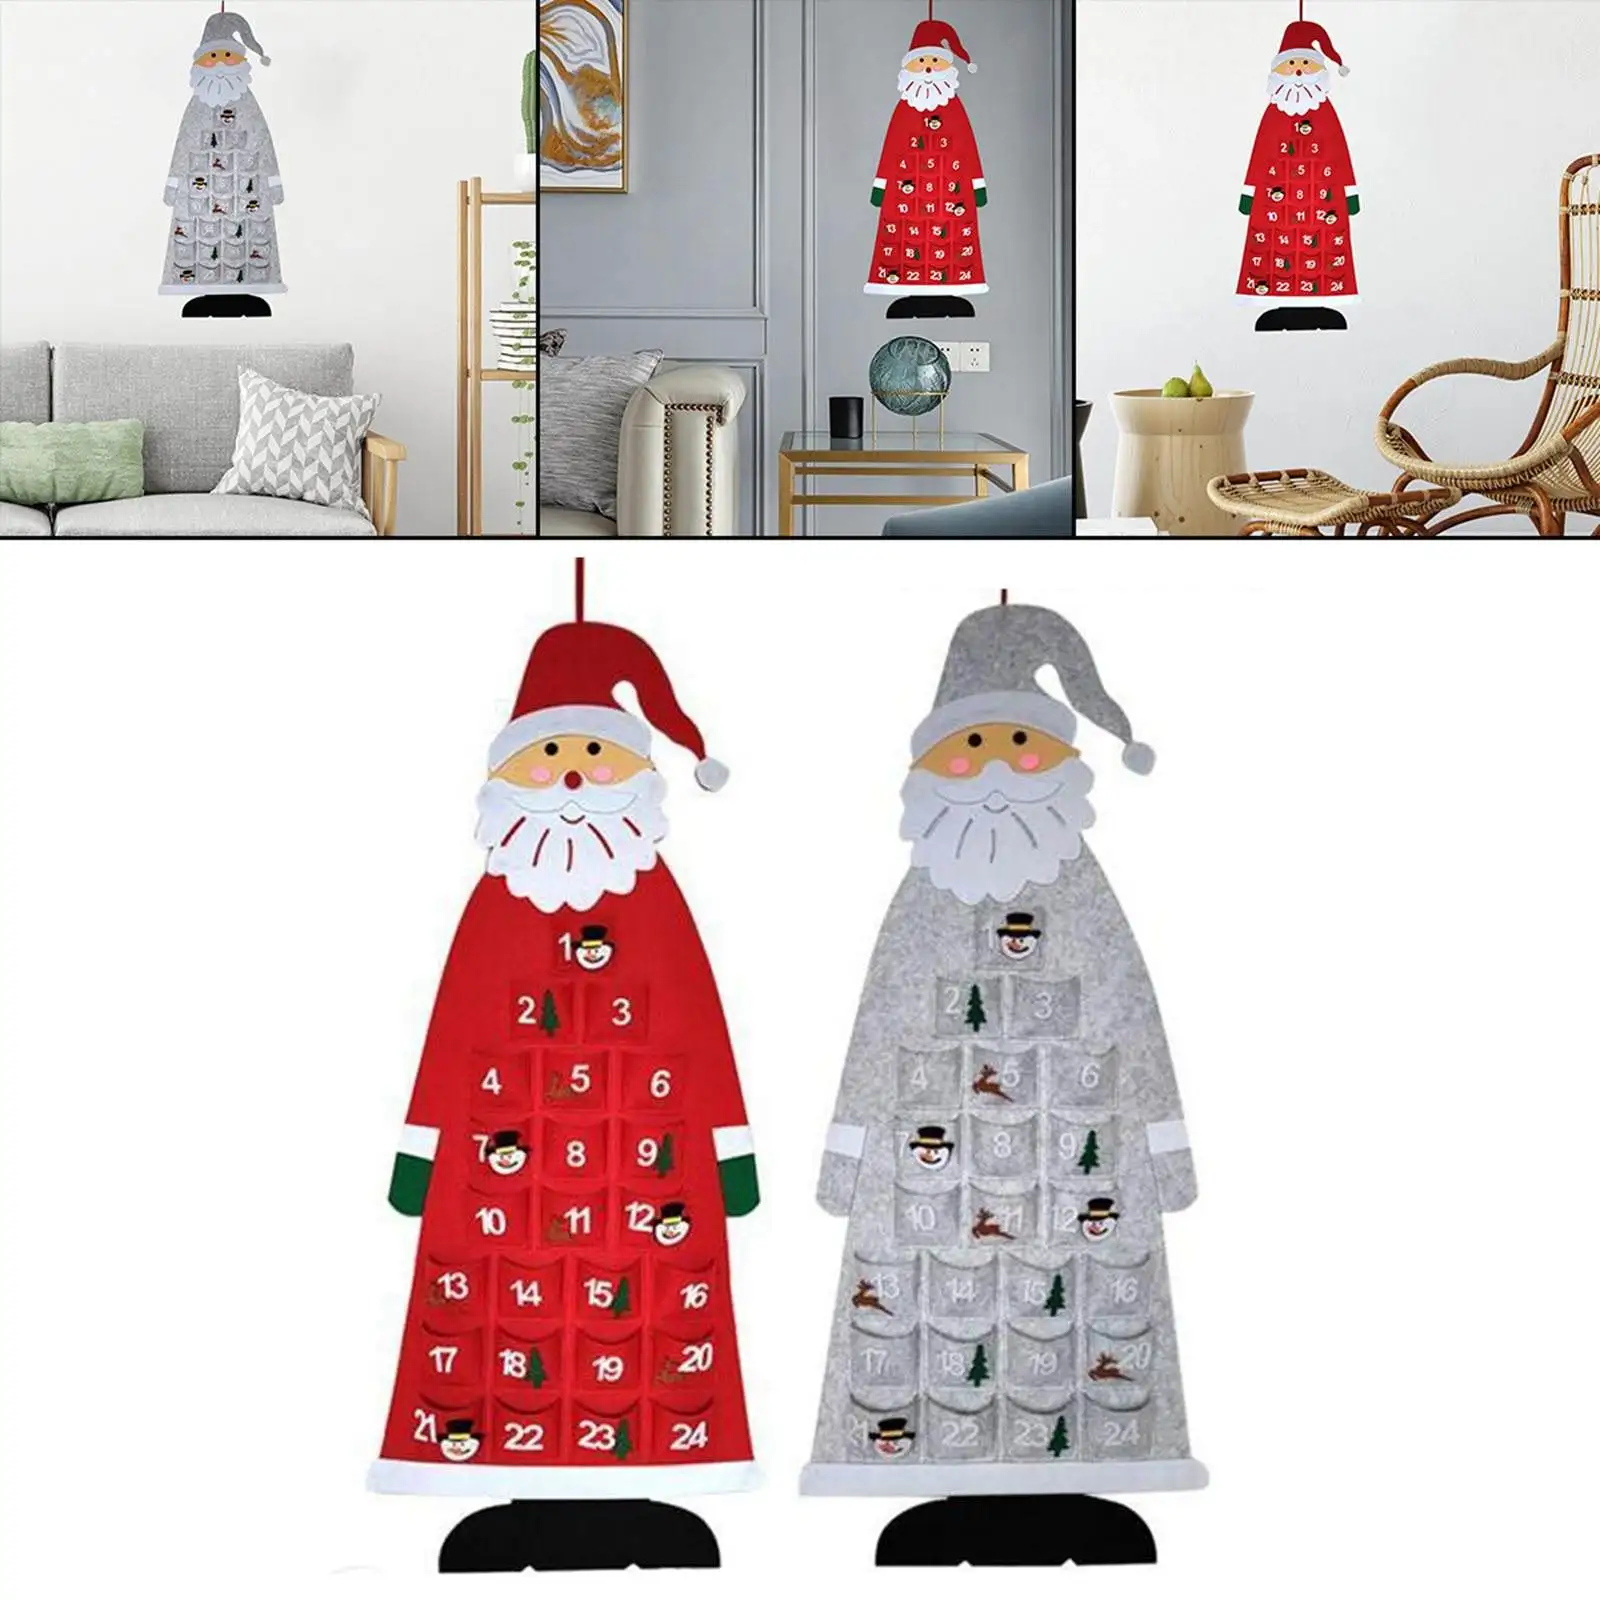 2x Christmas Advent Calendar Felt Wall Hanging With Pockets Santa Advent Calendar 24 Days Kids Toys Gift For Home Decor